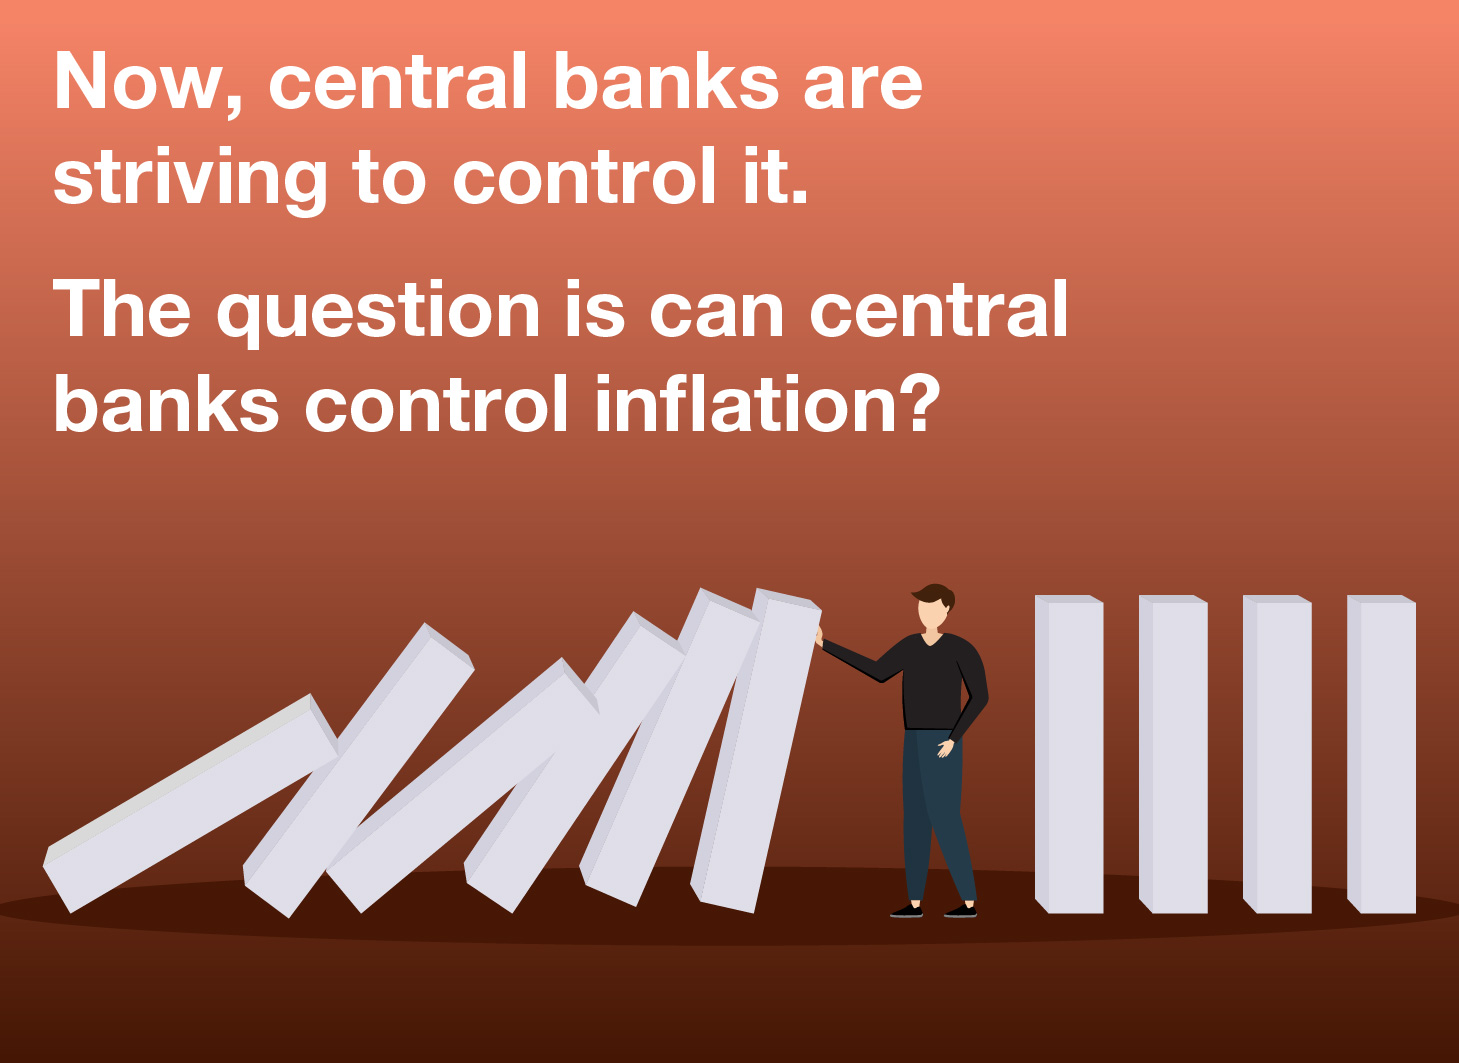 Central banks